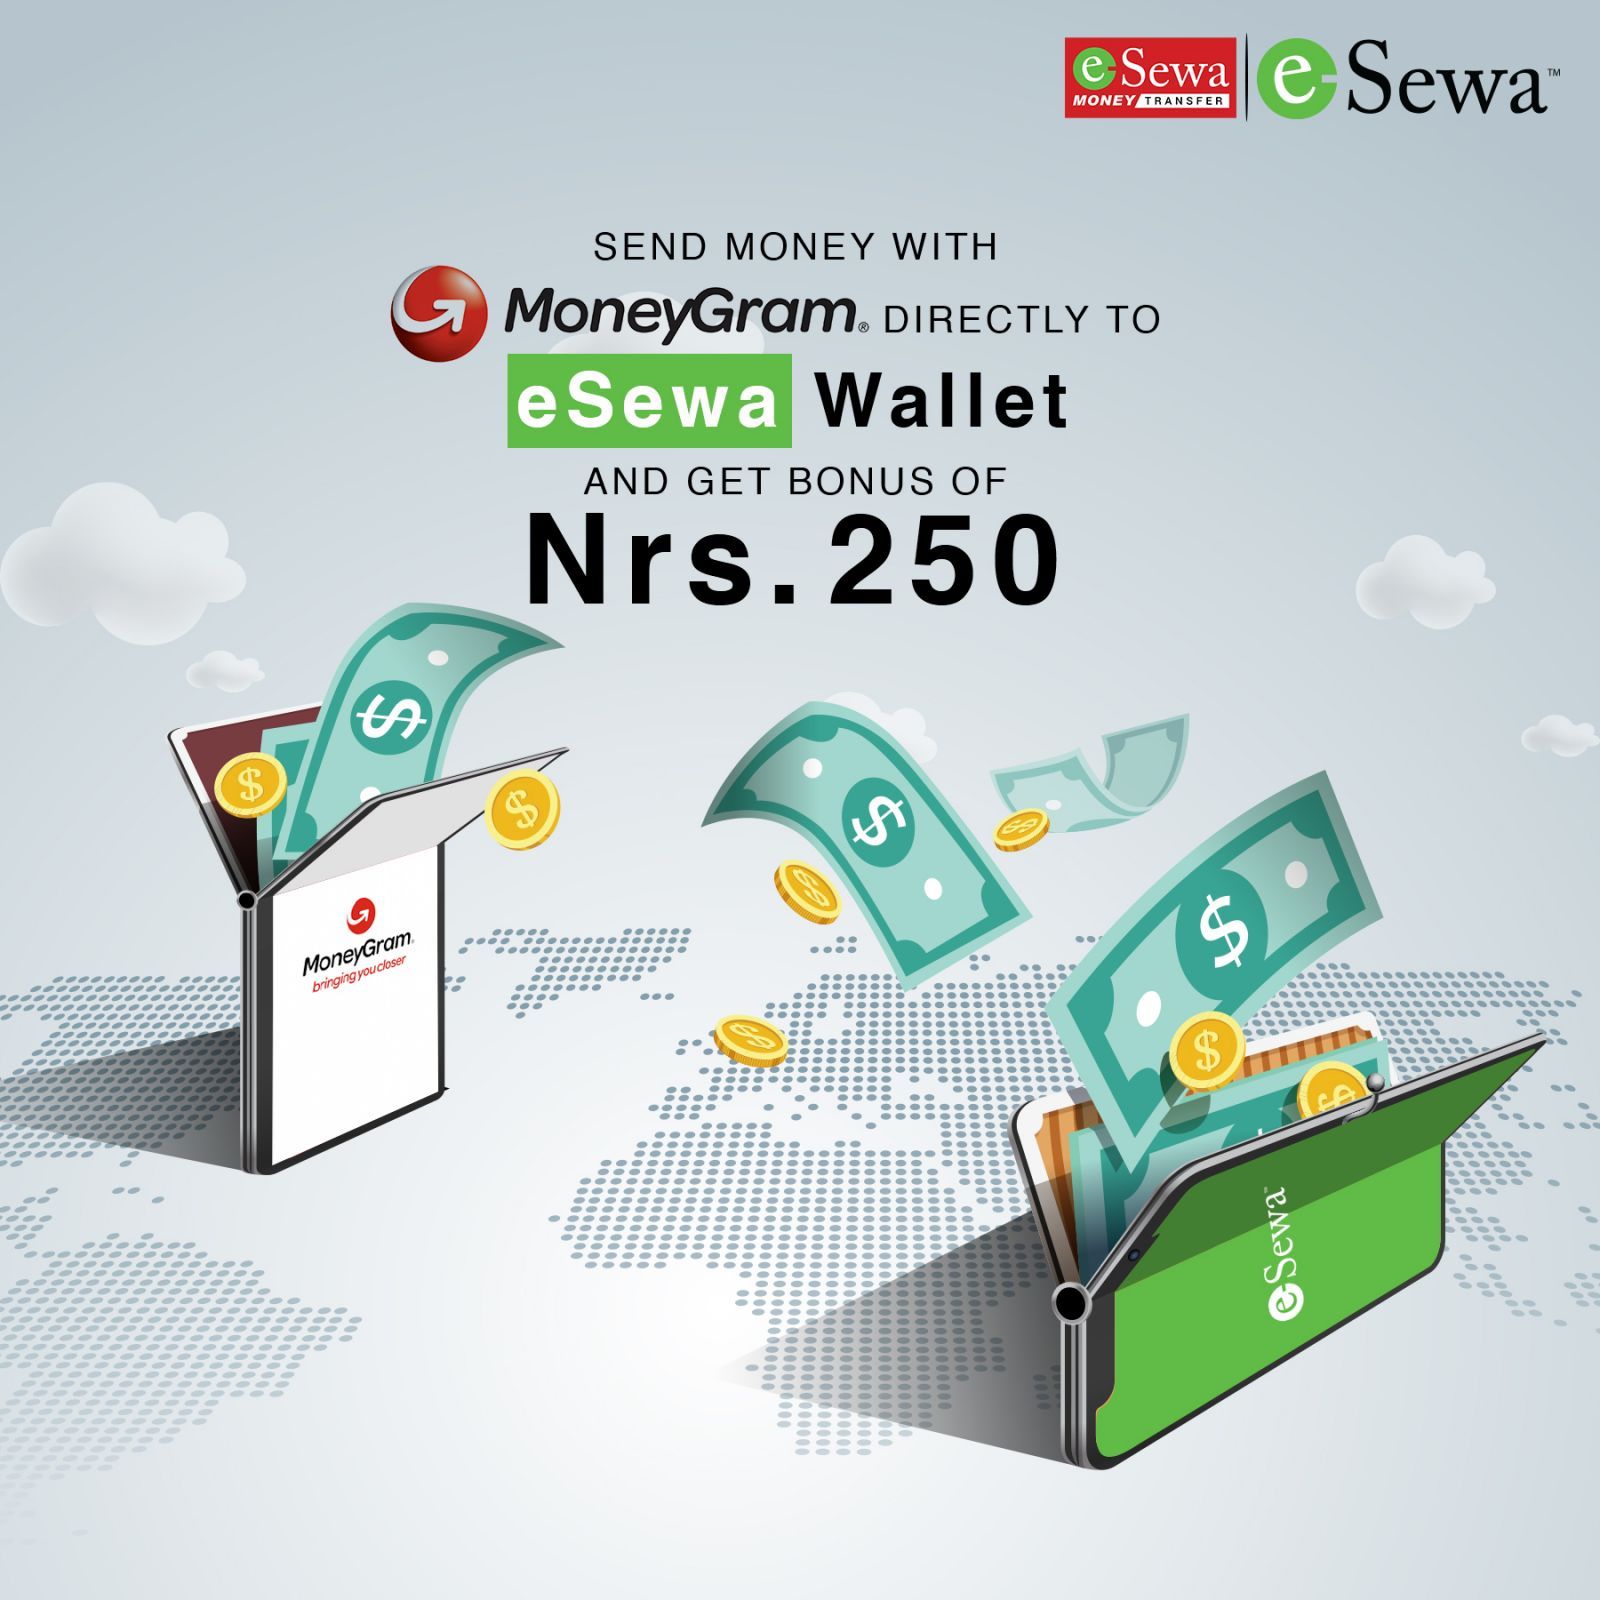 Rs 250 Bonus with MoneyGram and eSewa Money Transfer - Featured Image